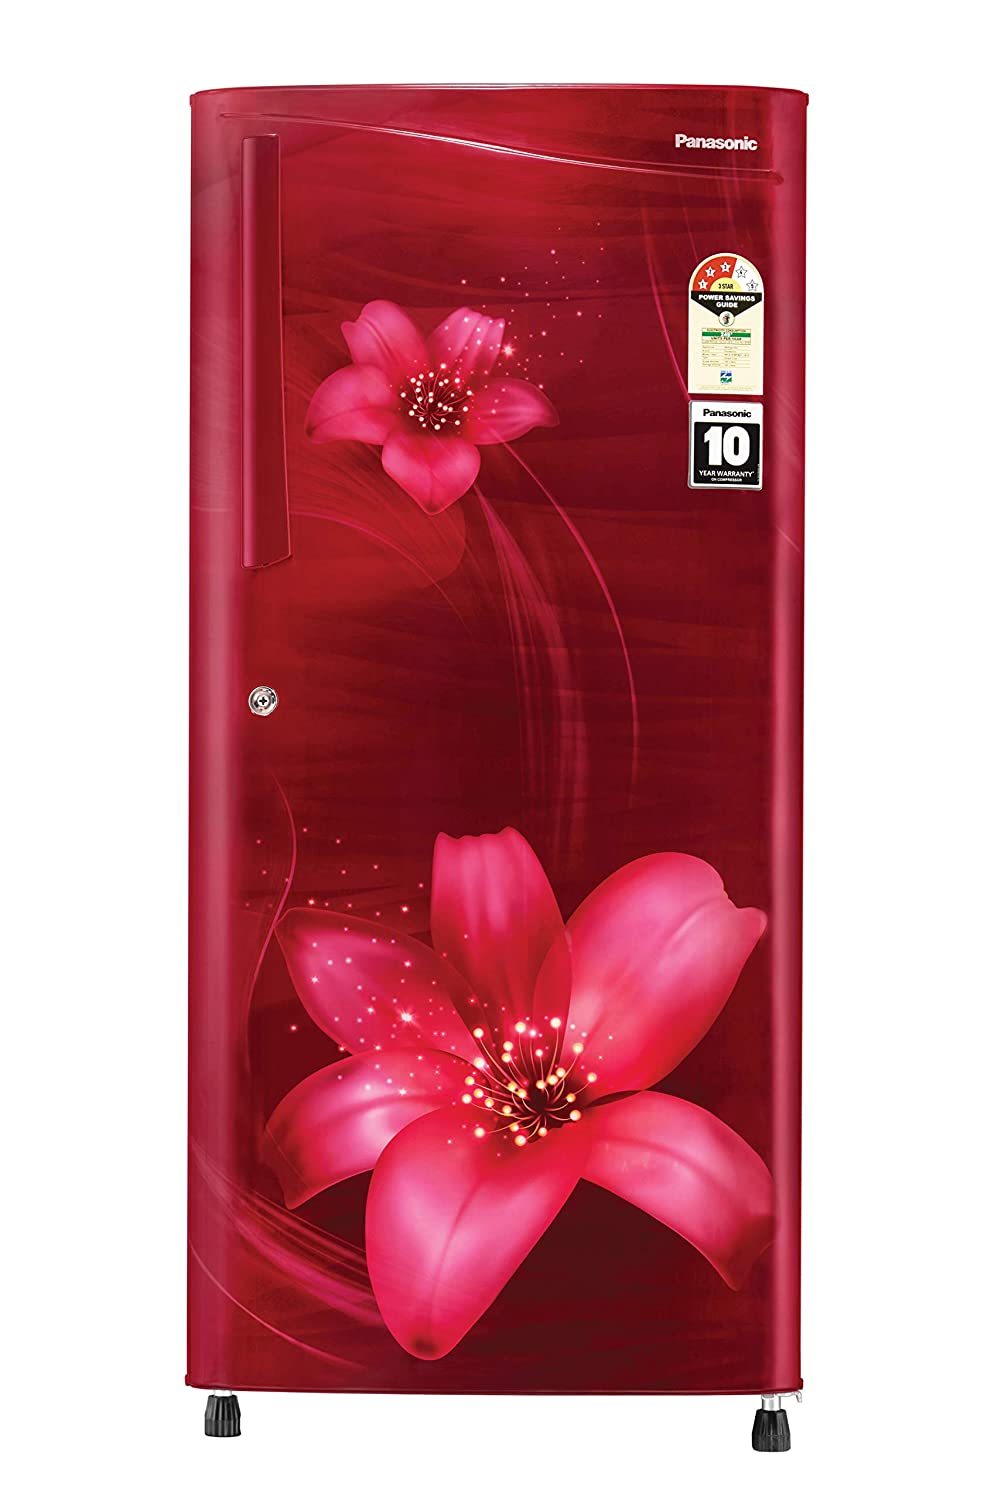 Panasonic 194 L 3 Star Inverter Direct-cool Single Door Refrigerator Nr-a193vfmx1 Maroon Floral